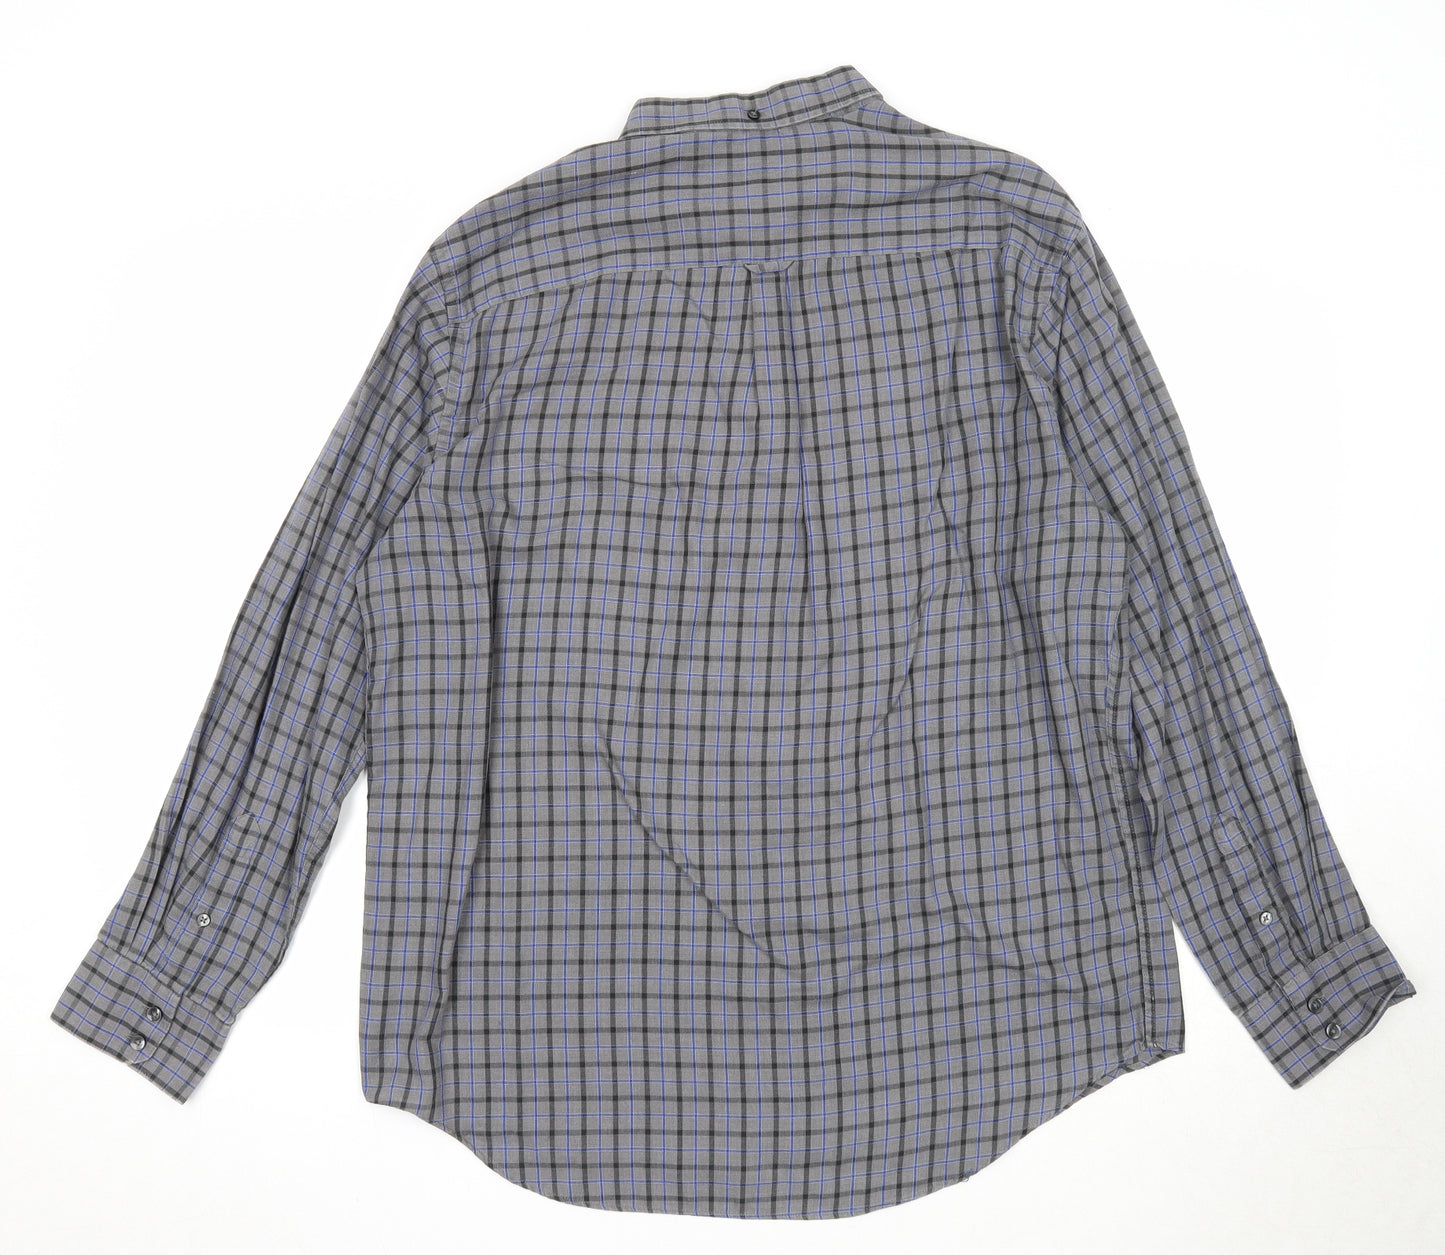 Van Heusen Mens Grey Plaid Cotton Button-Up Size L Collared Button